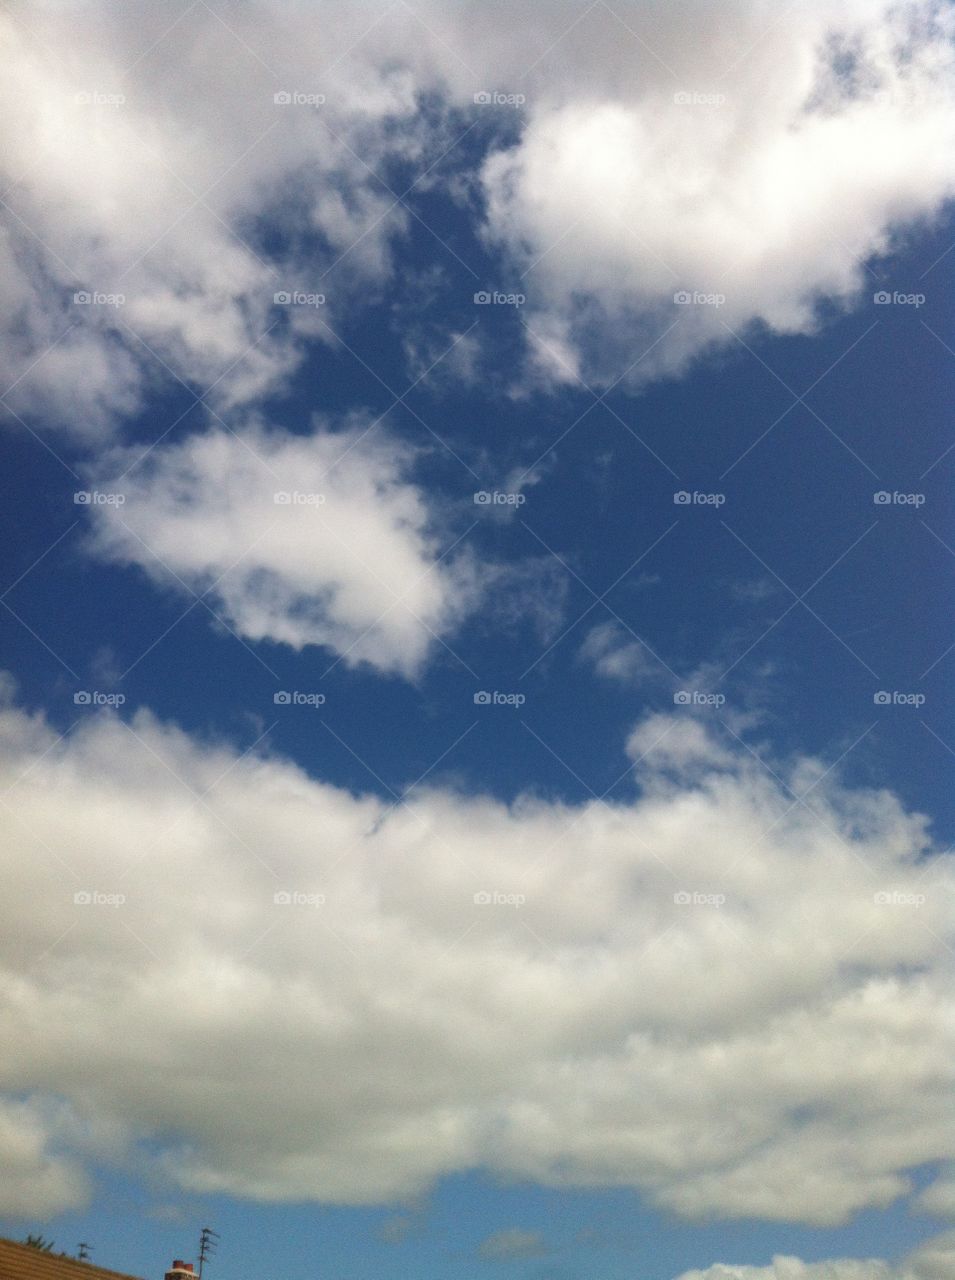 Liverpool Sky. The sky taken in Liverpool 